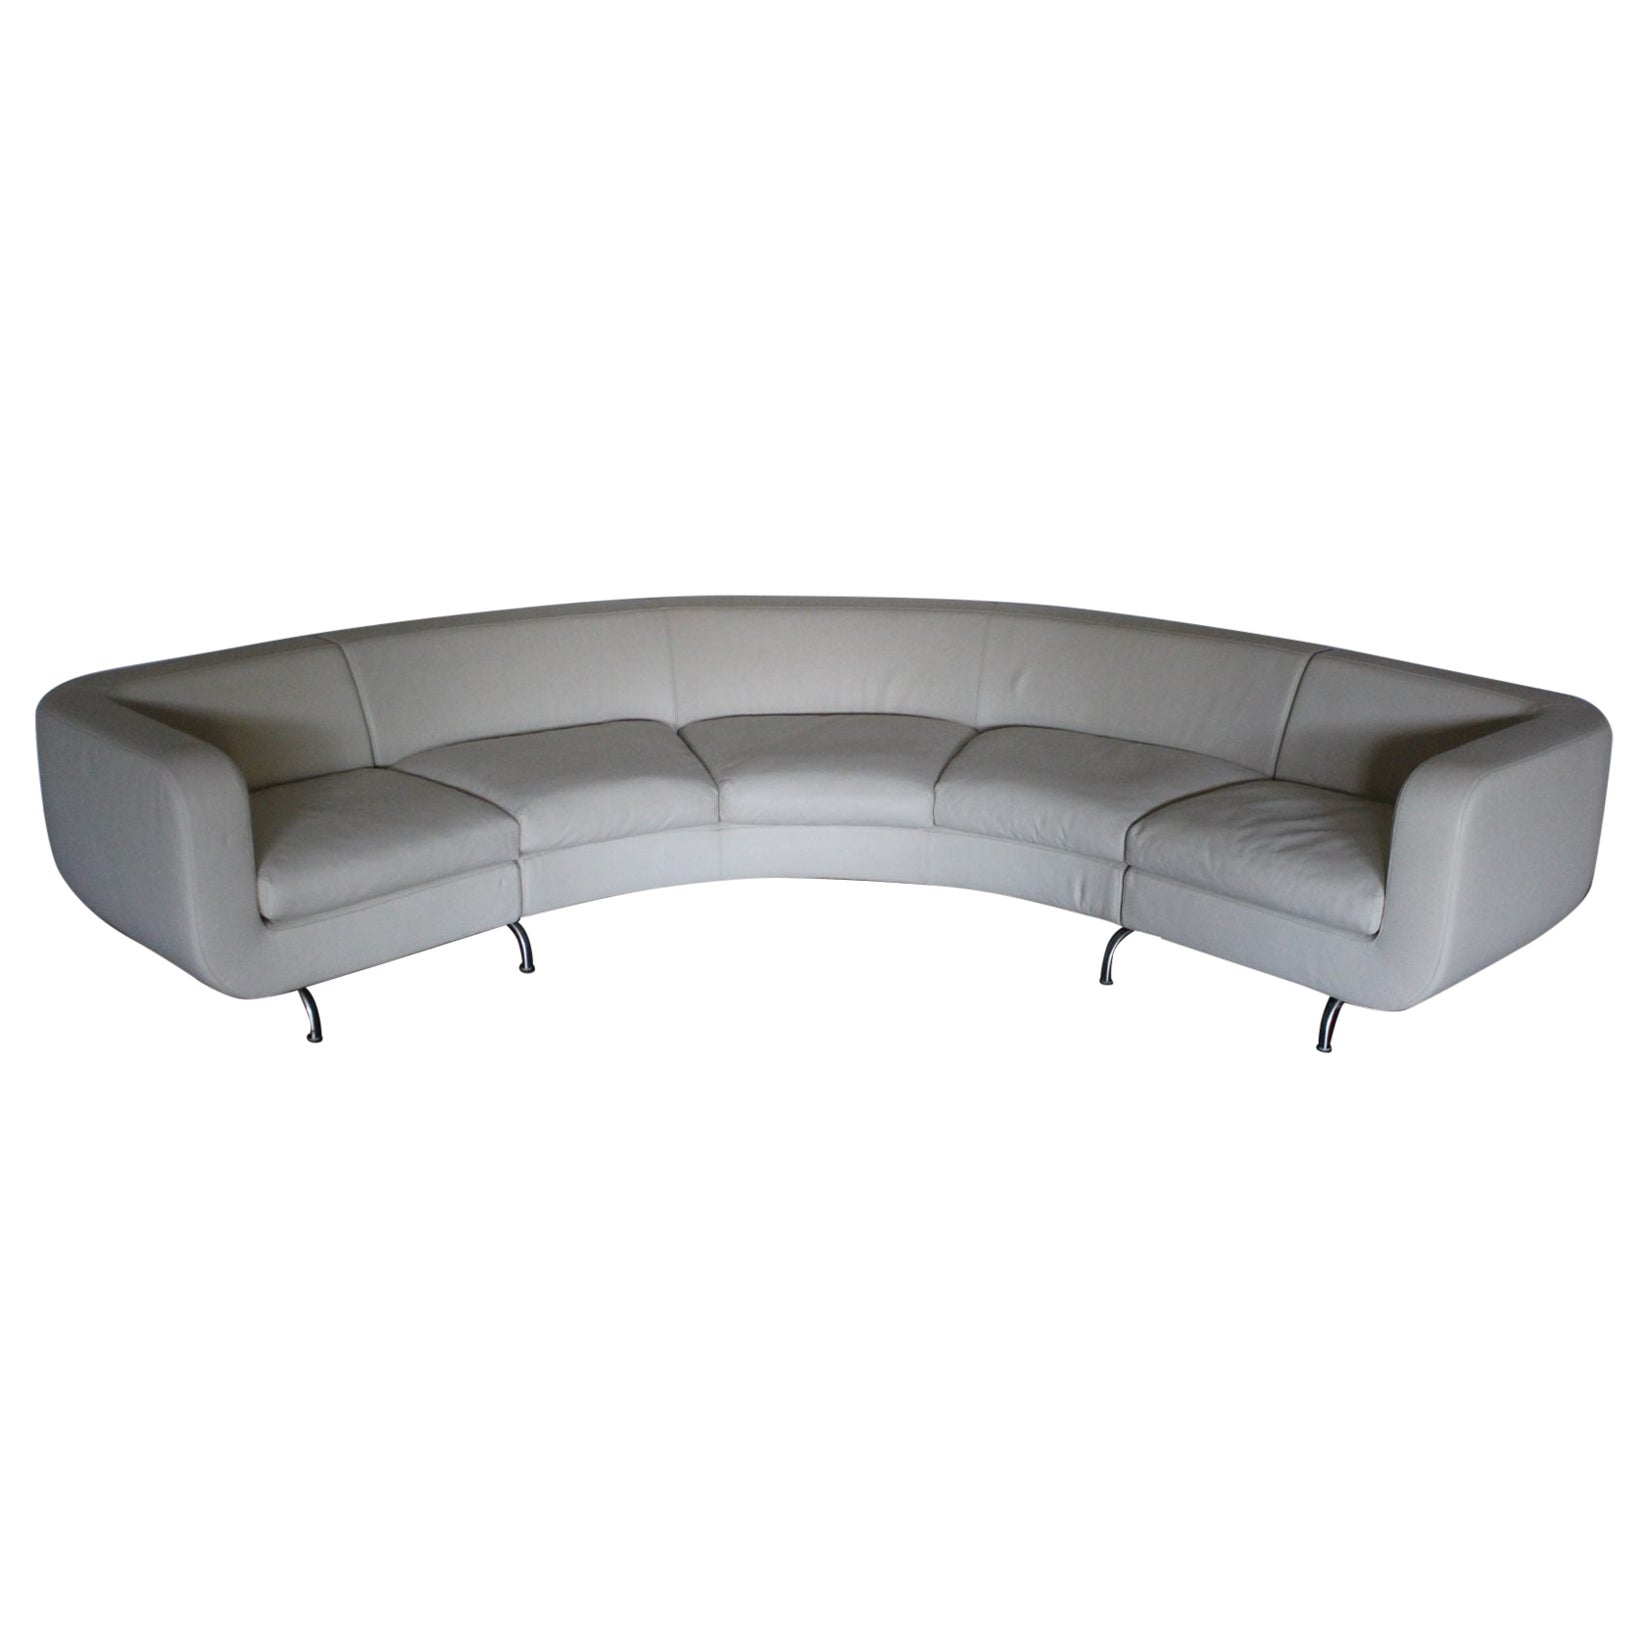 Rare Minotti “Dubuffet” Curved Sofa, in Cream “Pelle” Leather